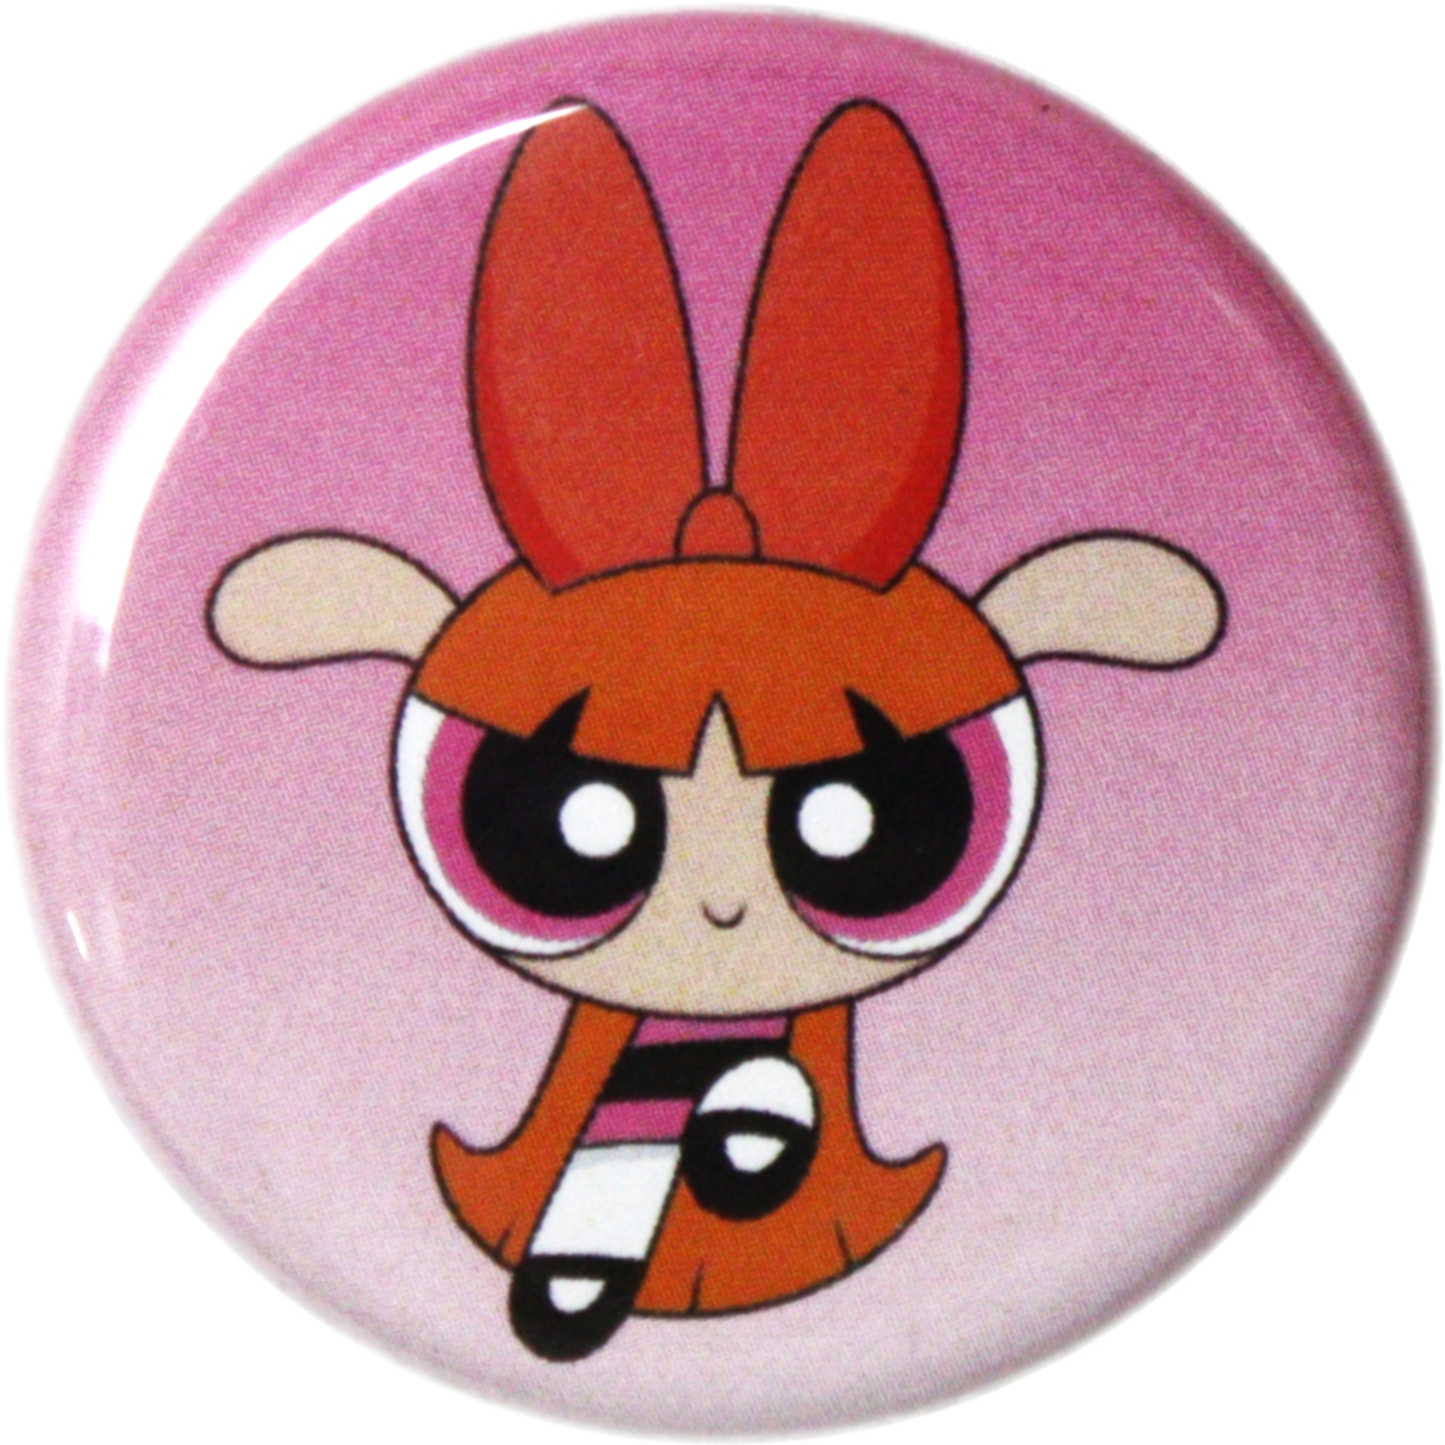 POWERPUFF GIRLS - Blossom - 1.25 inch Pin-on Button